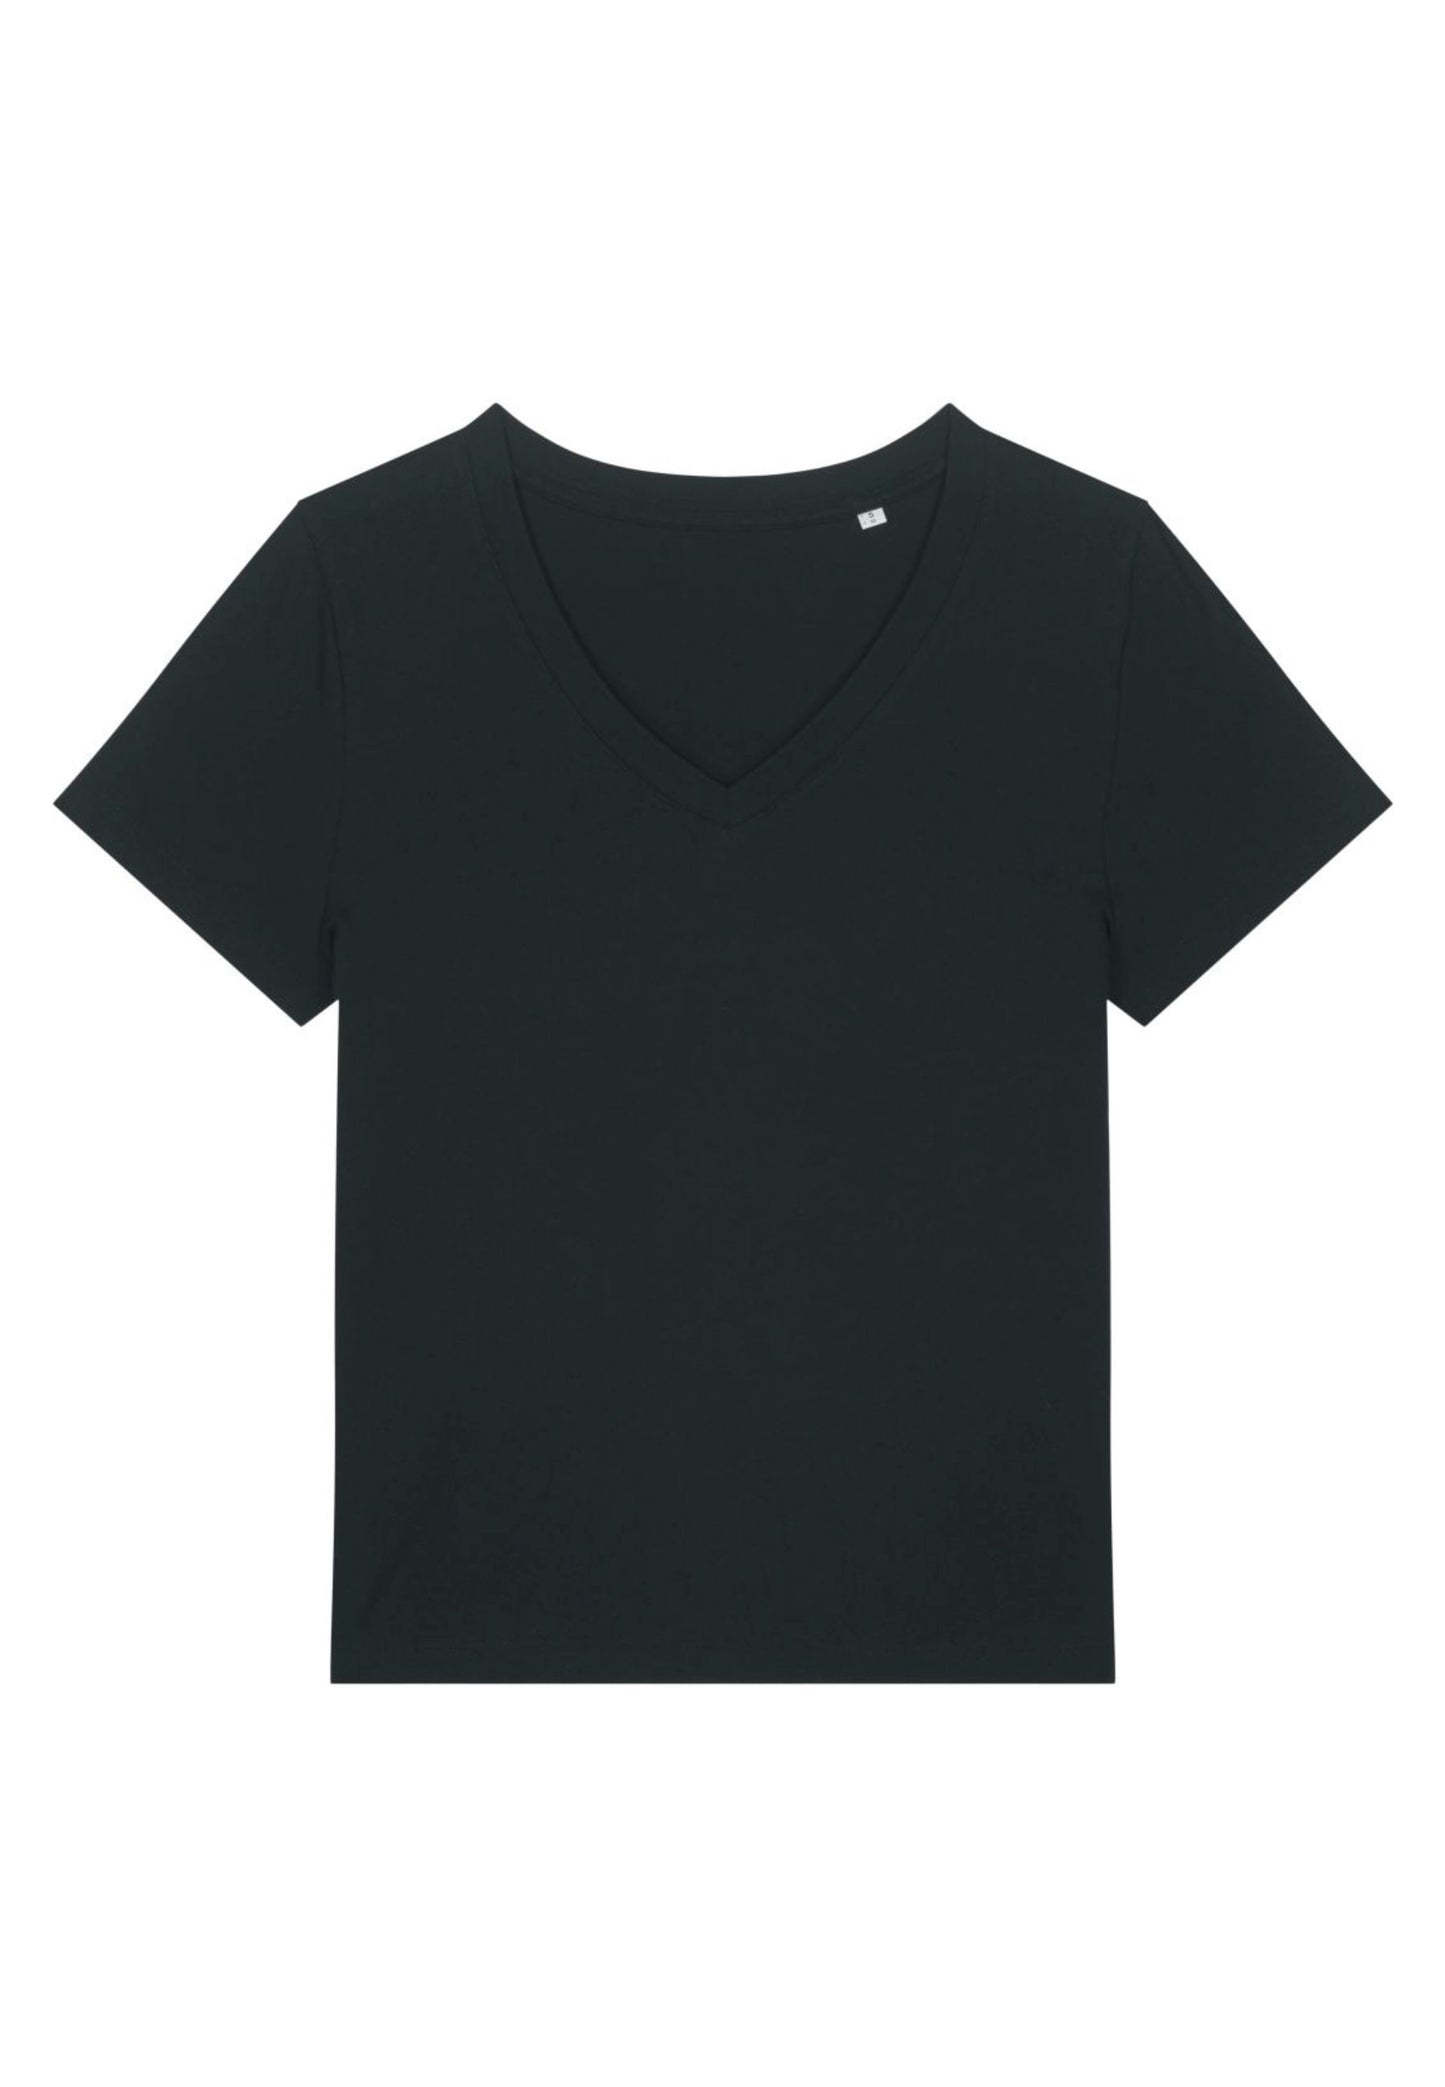 Isla Damen-V-Shirt